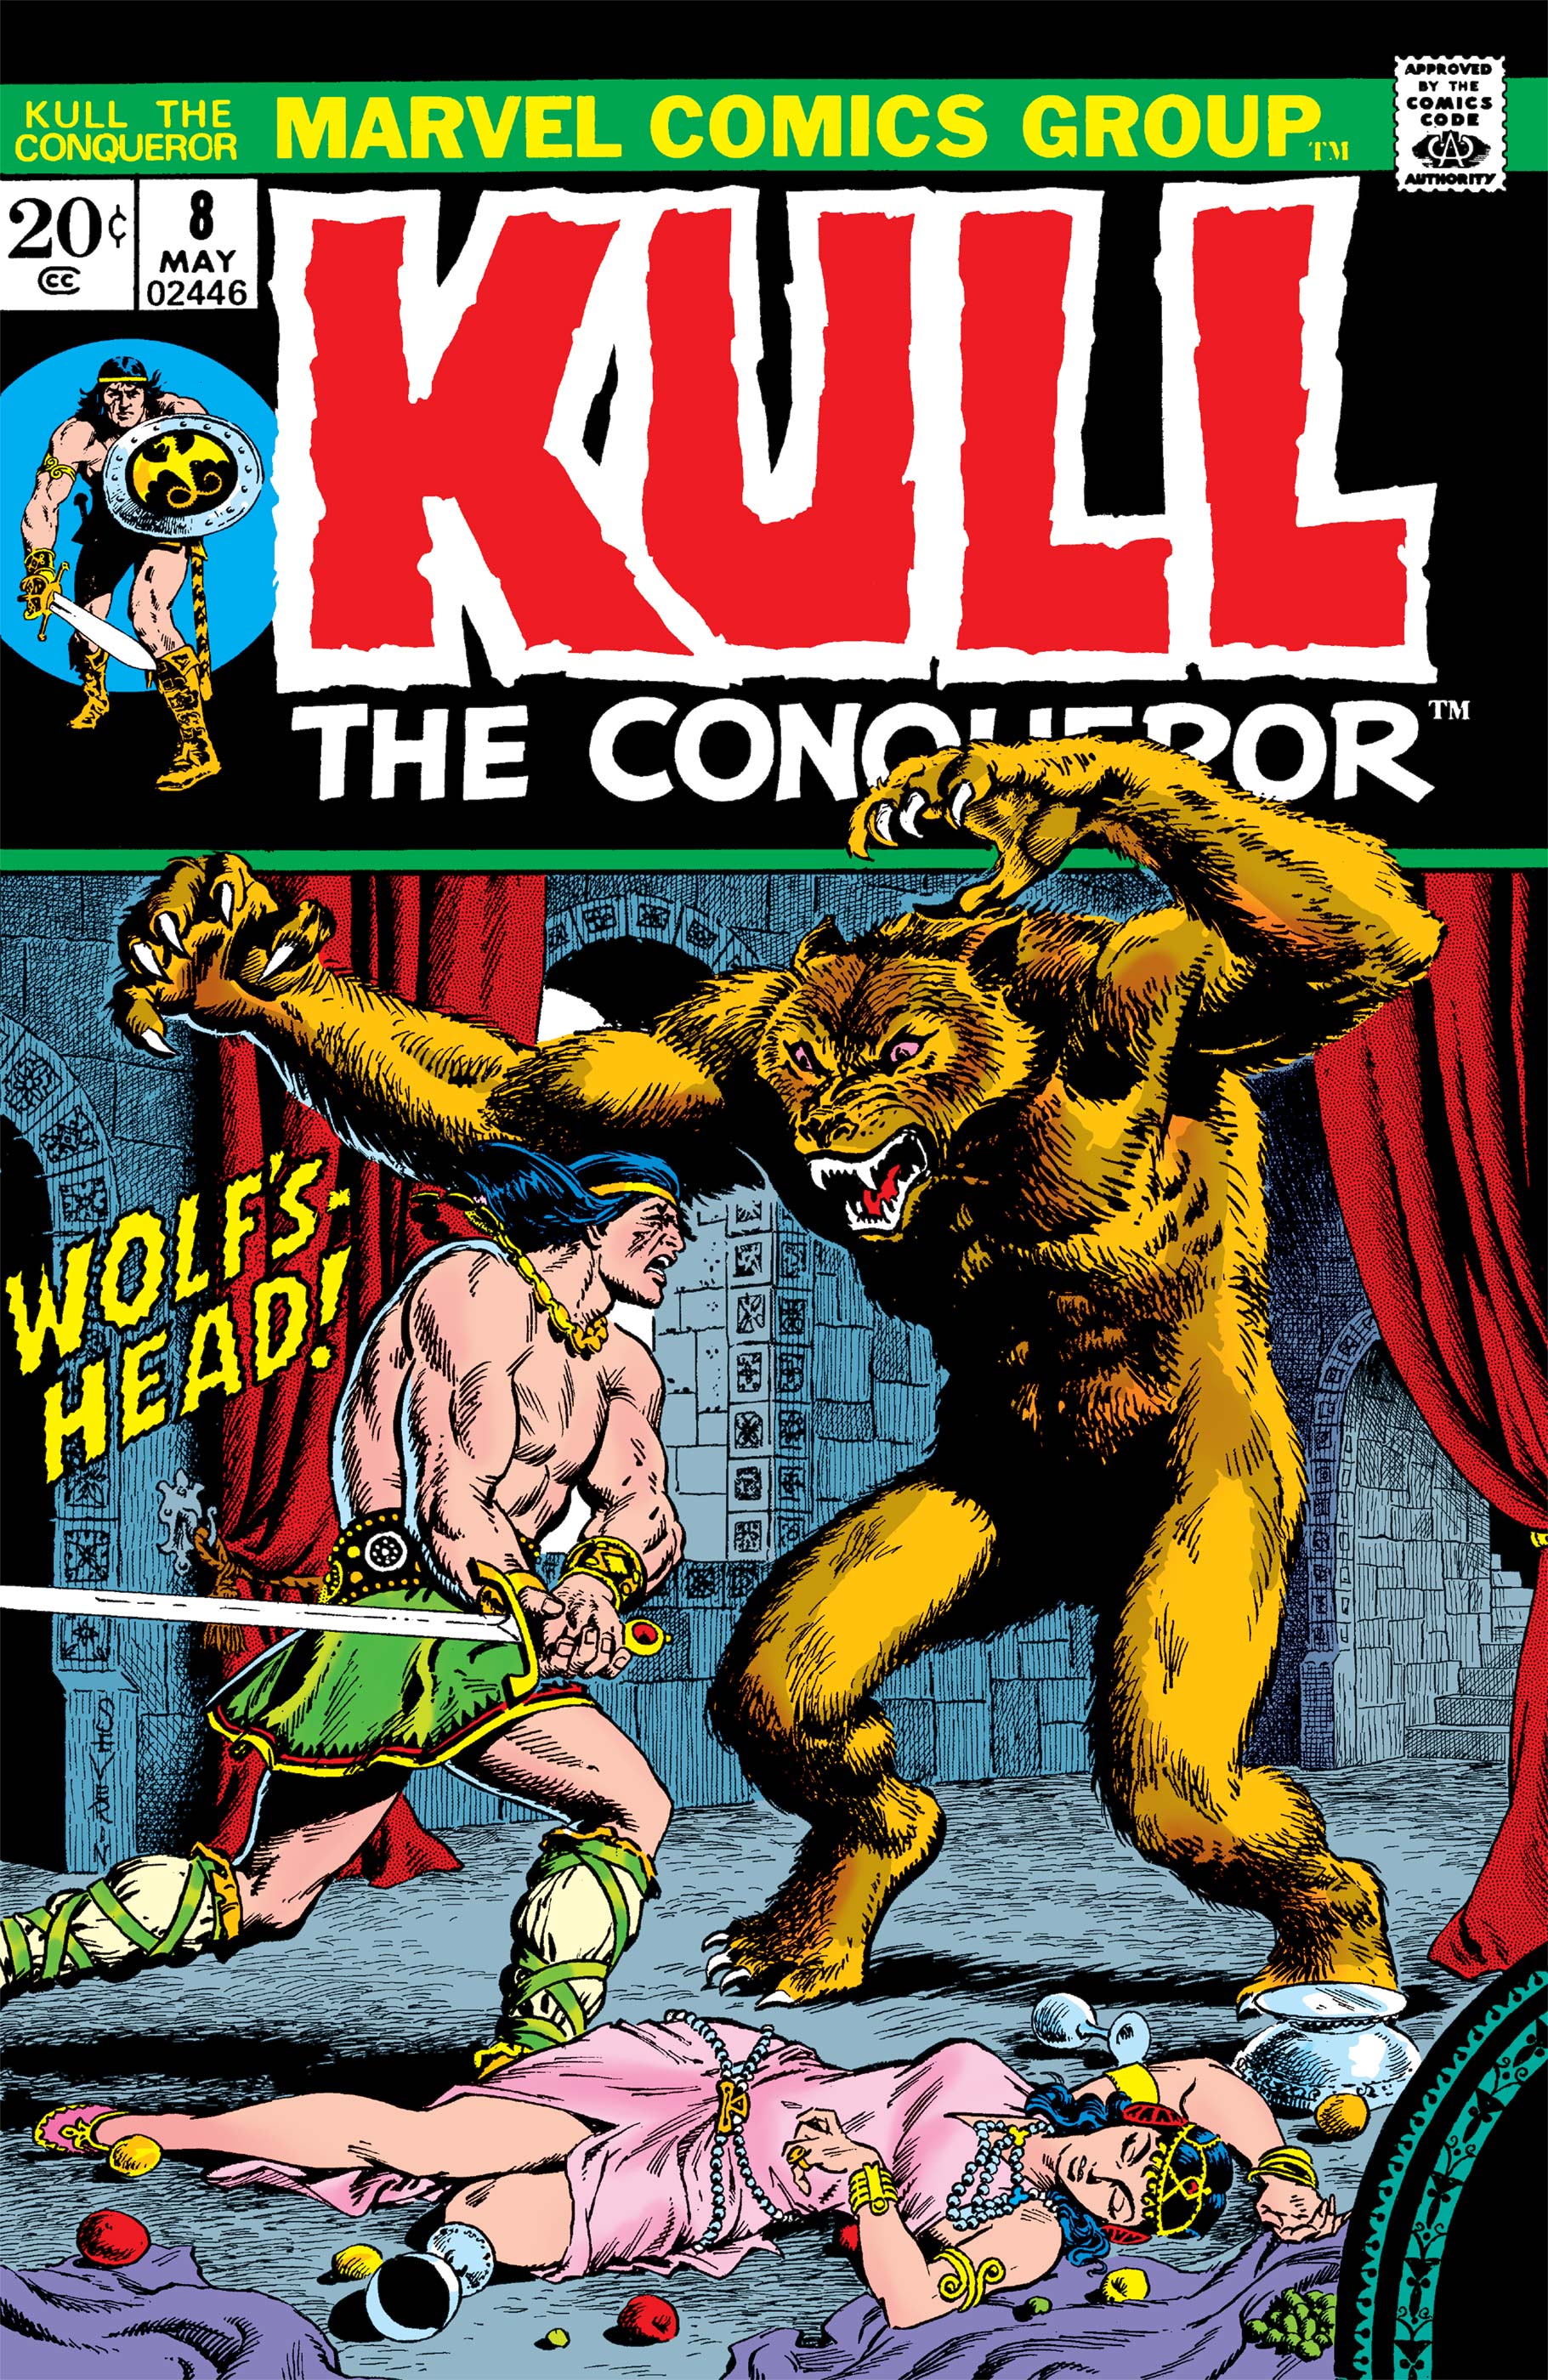 Kull the Conqueror (1971) #8